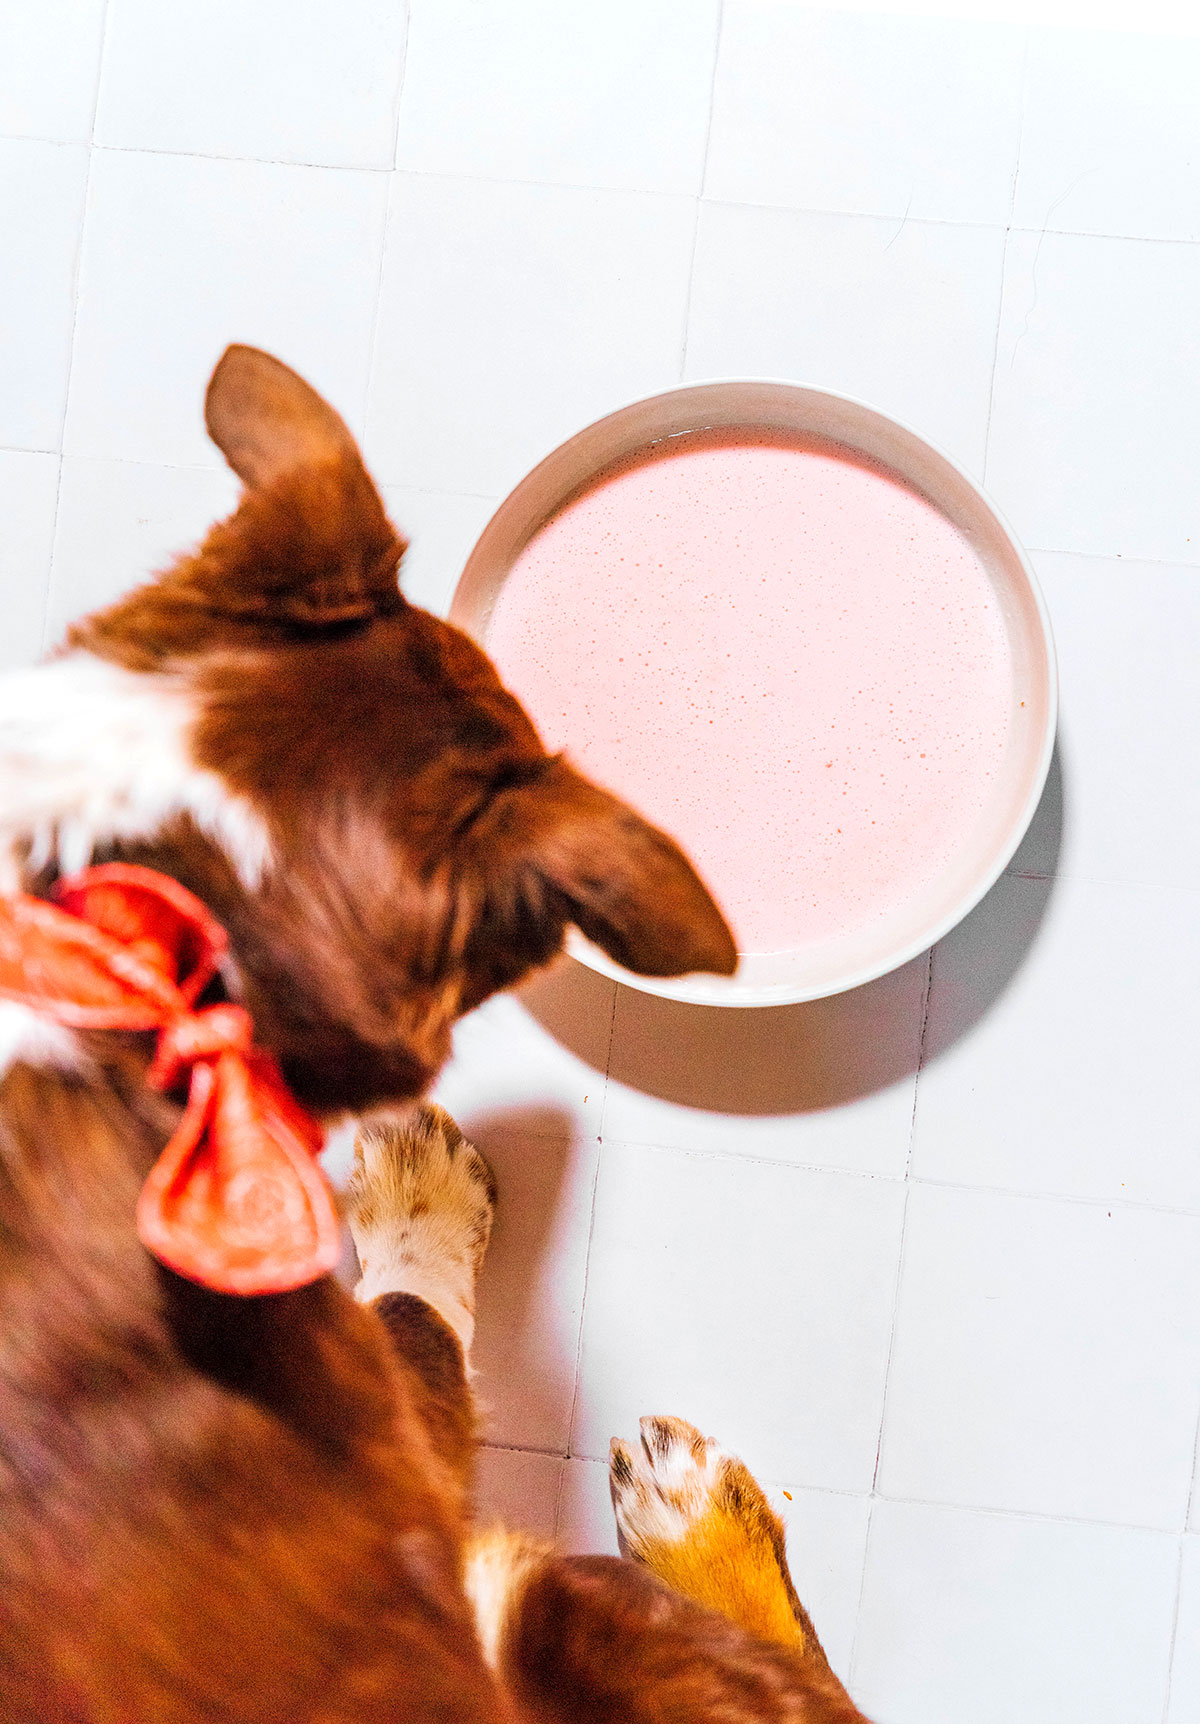 A brown dog drinking milk kefir